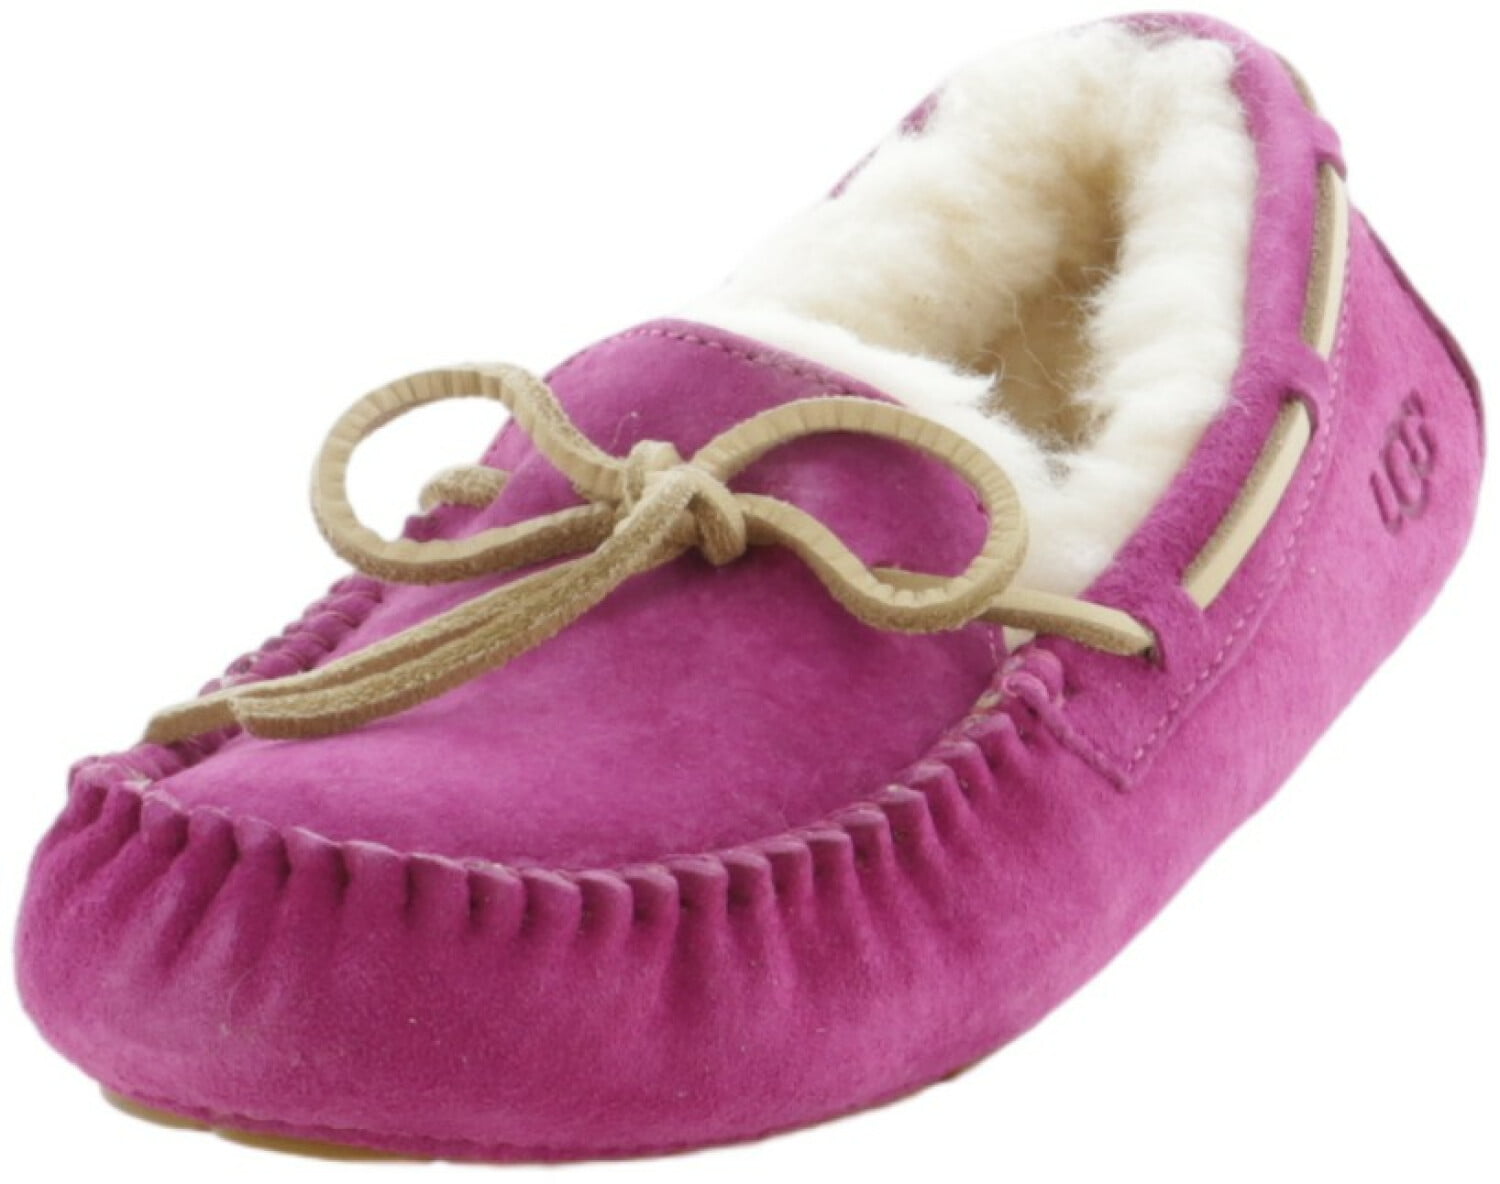 purple uggs slippers